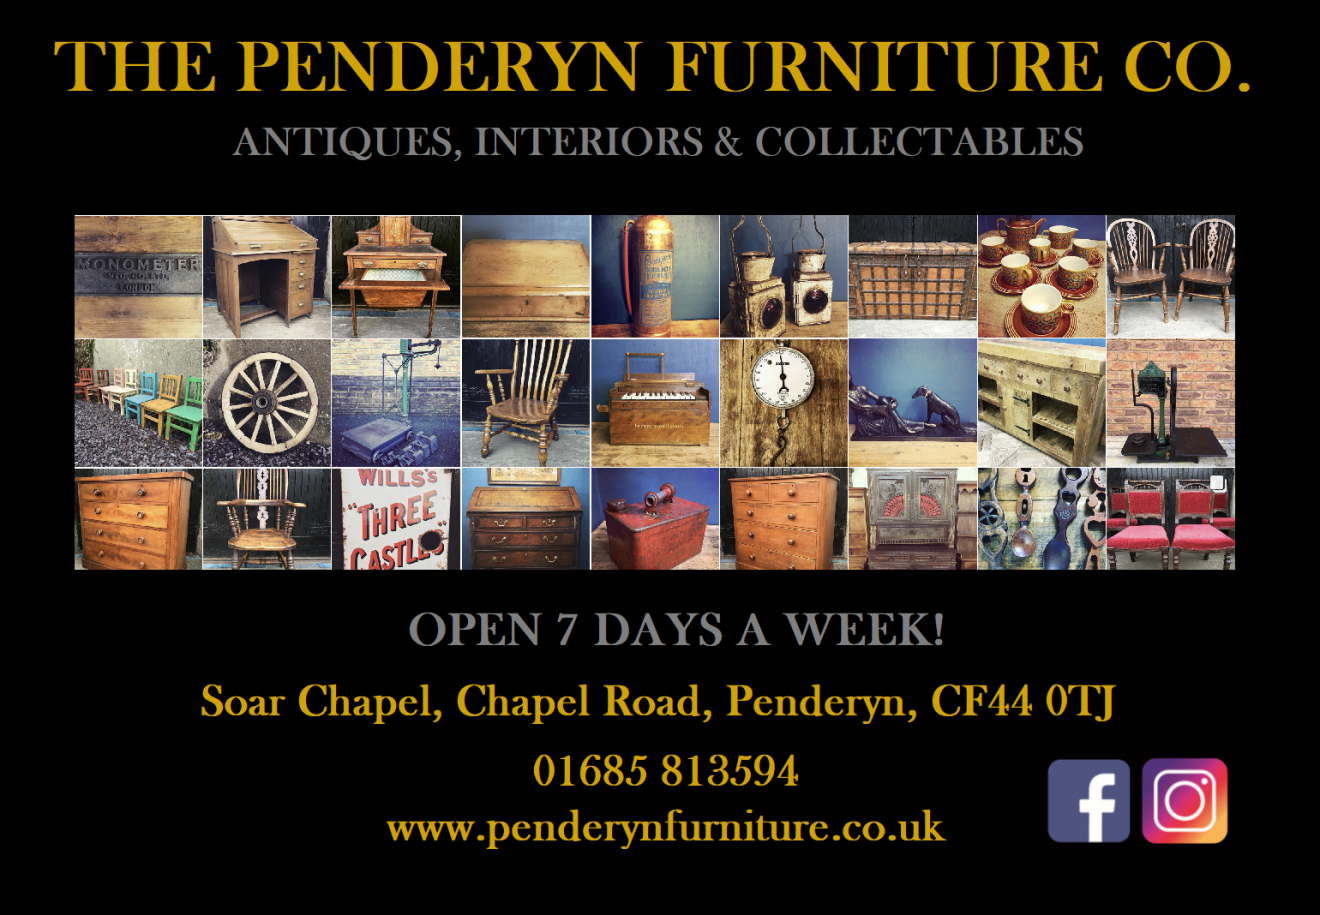 Penderyn Furniture Co Advertisement